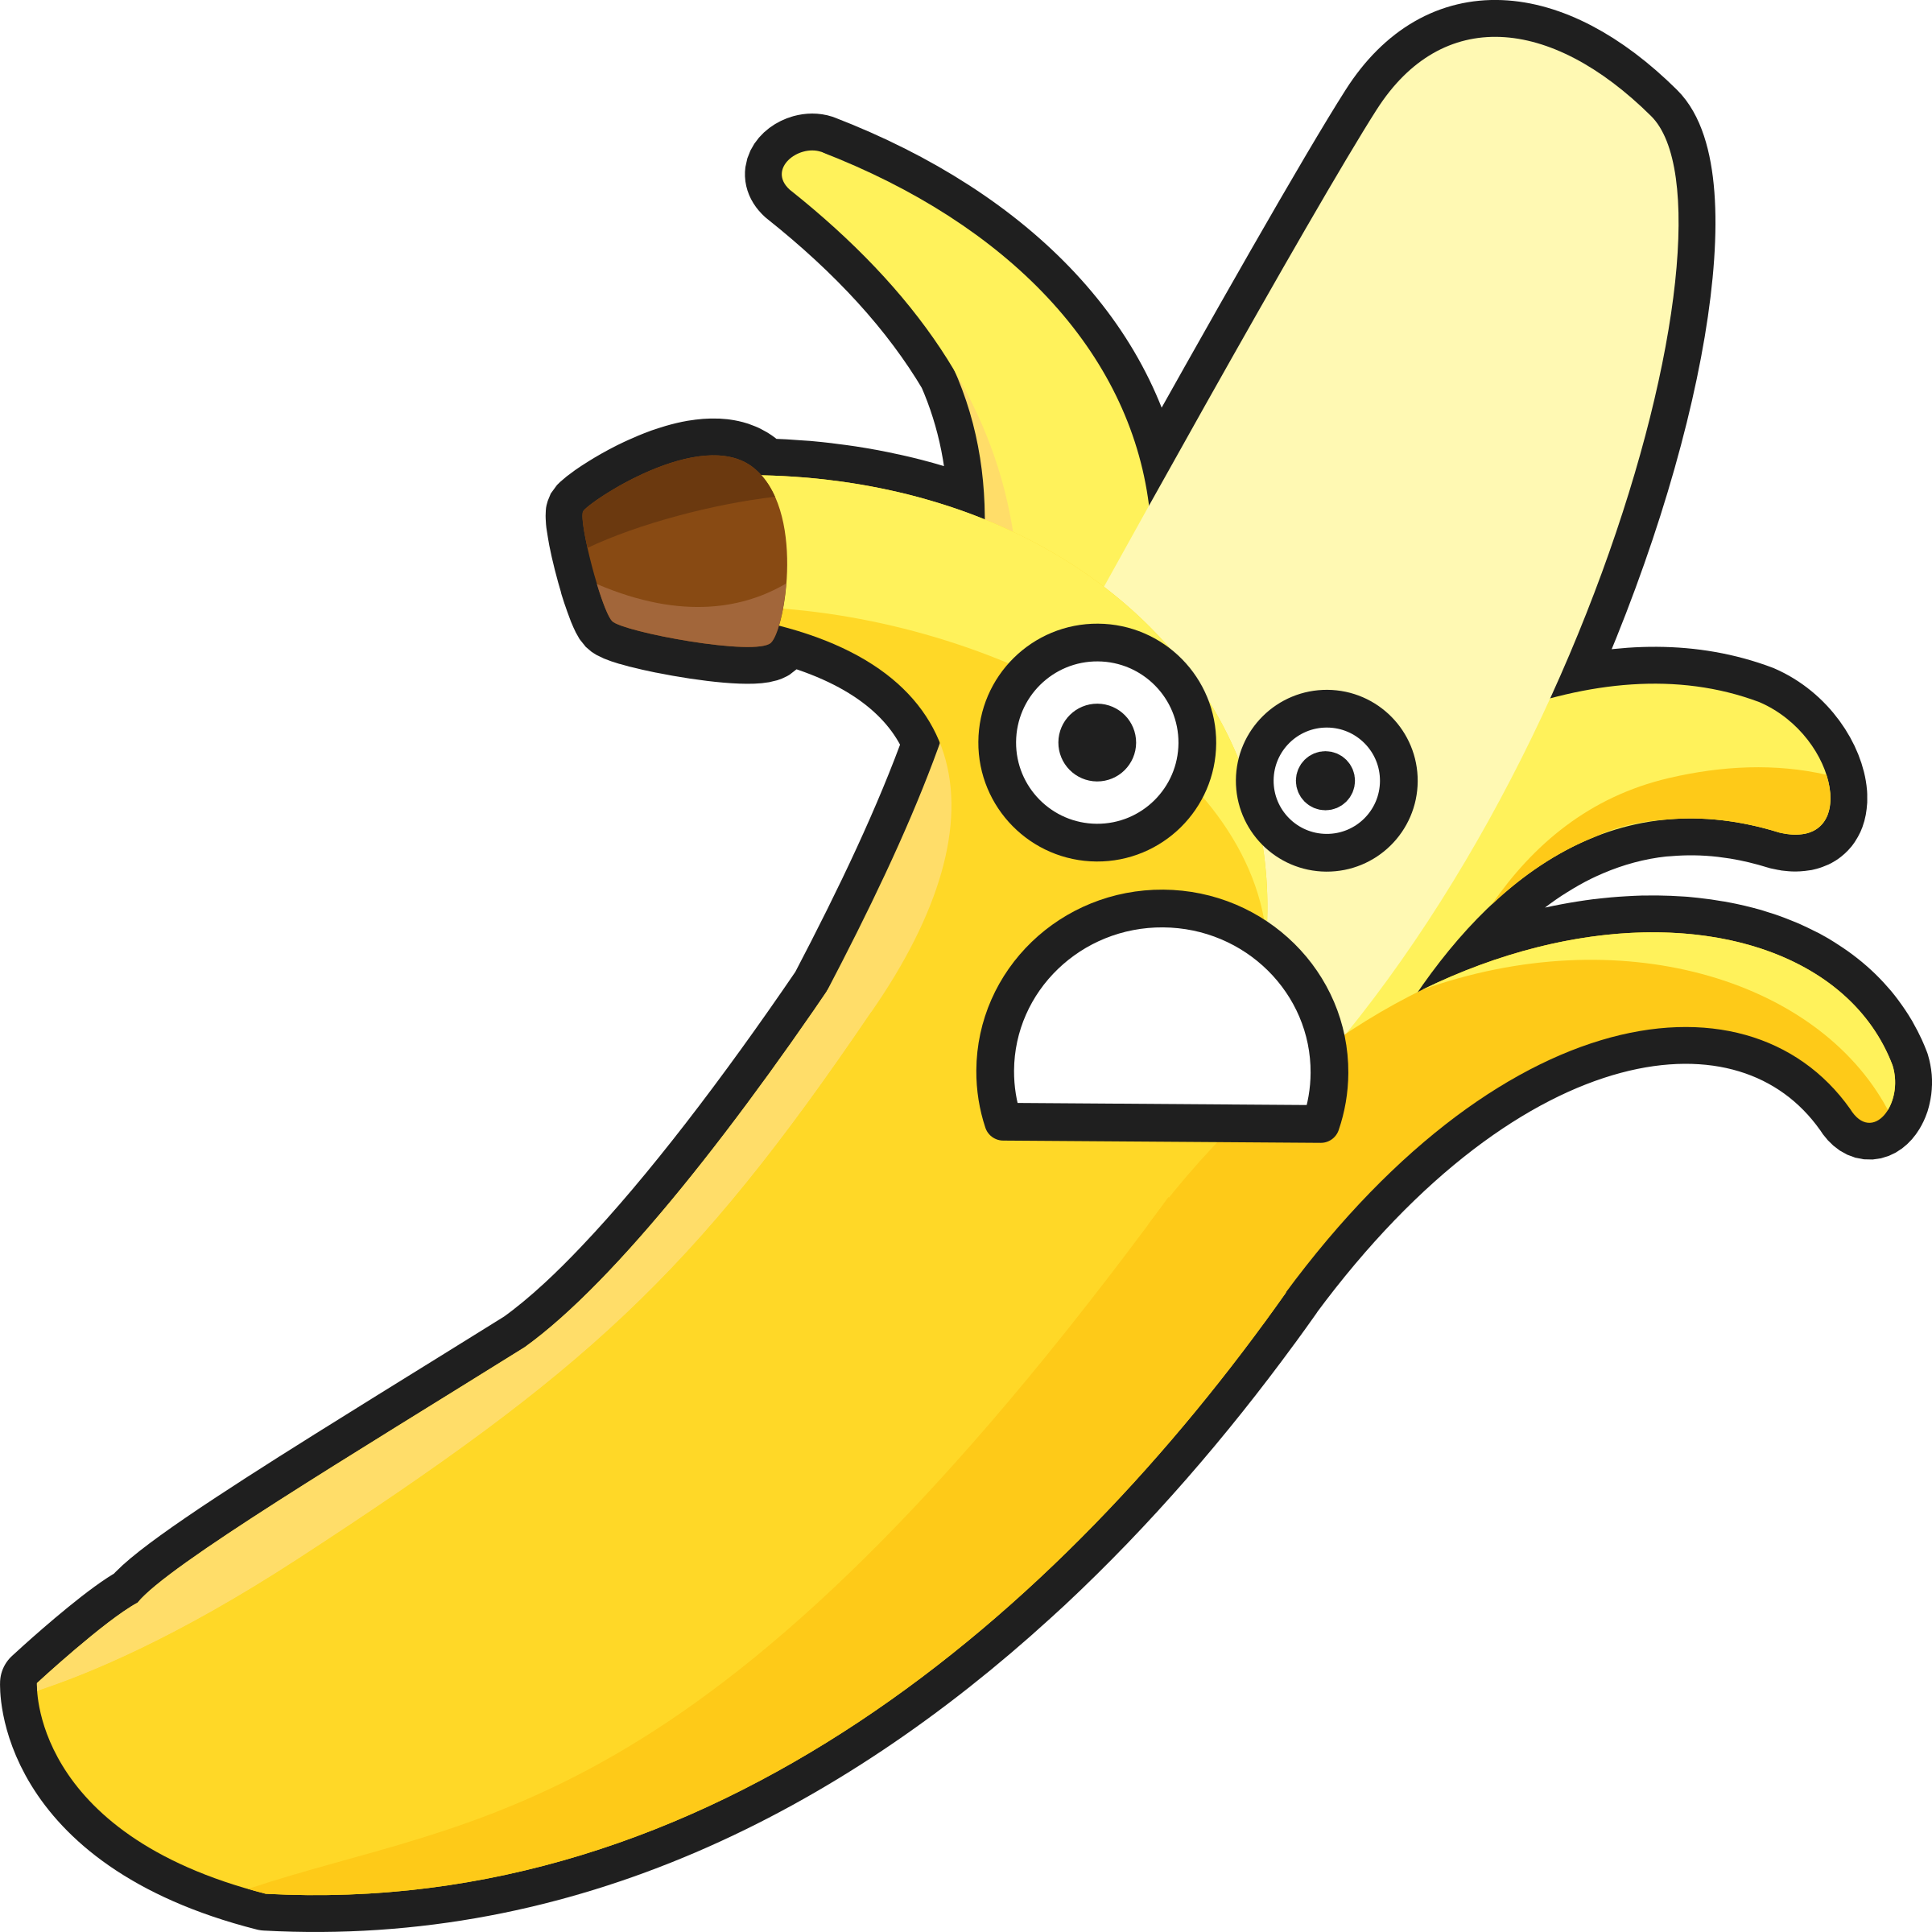 Clipart banana sad. Big image png